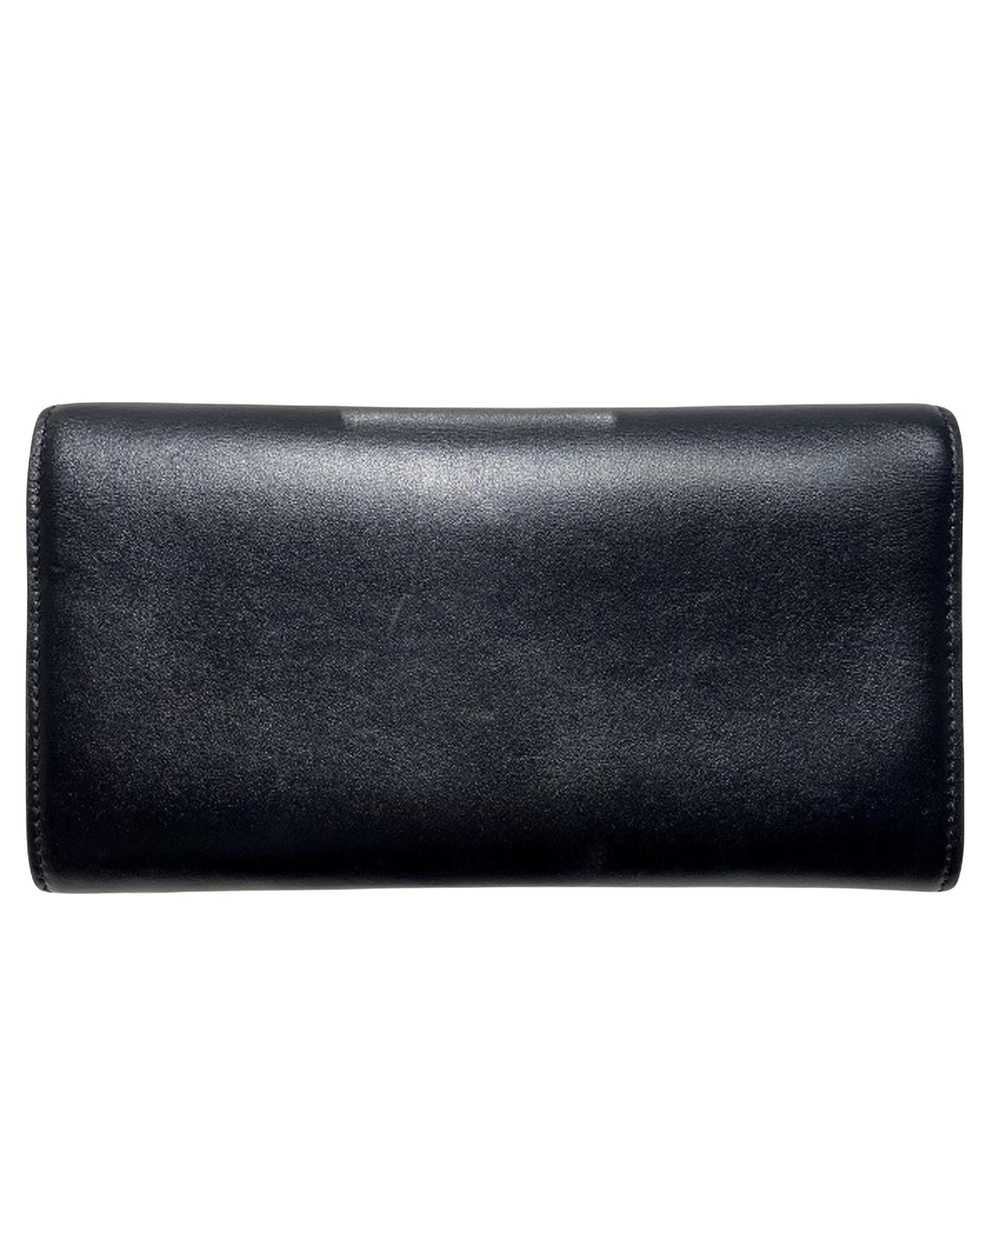 Chloe Refined Black Leather Long Wallet for Women - image 8